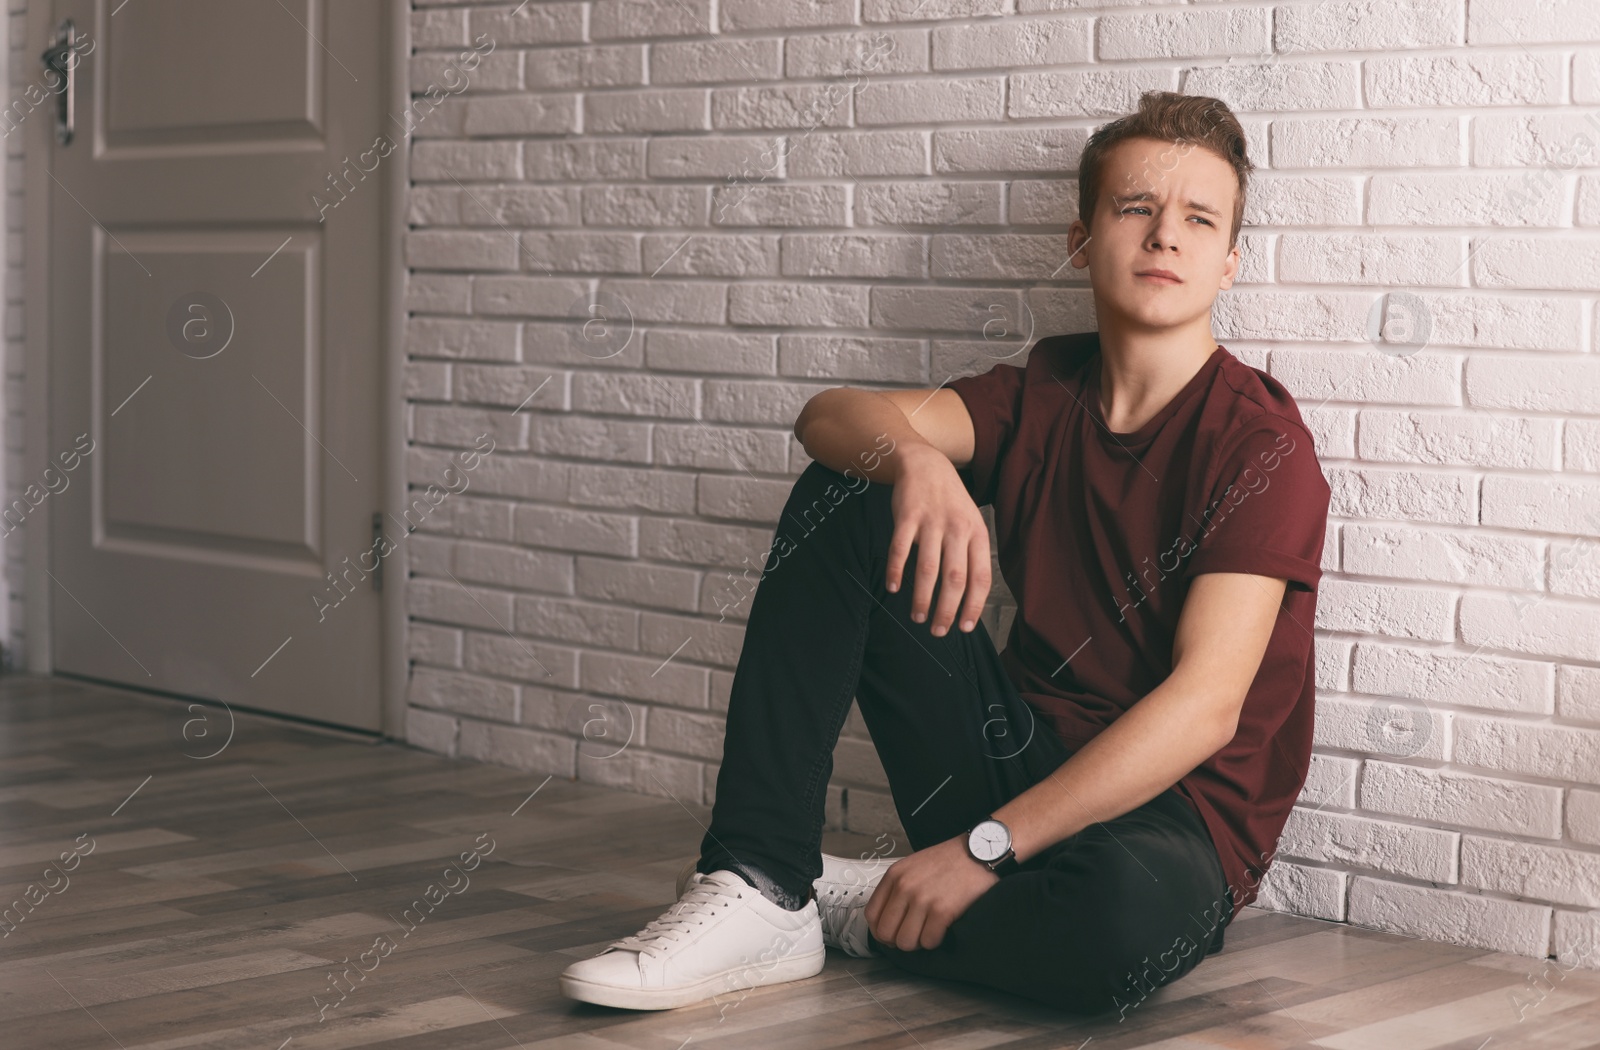 Photo of Upset teenage boy sitting alone on floor near wall